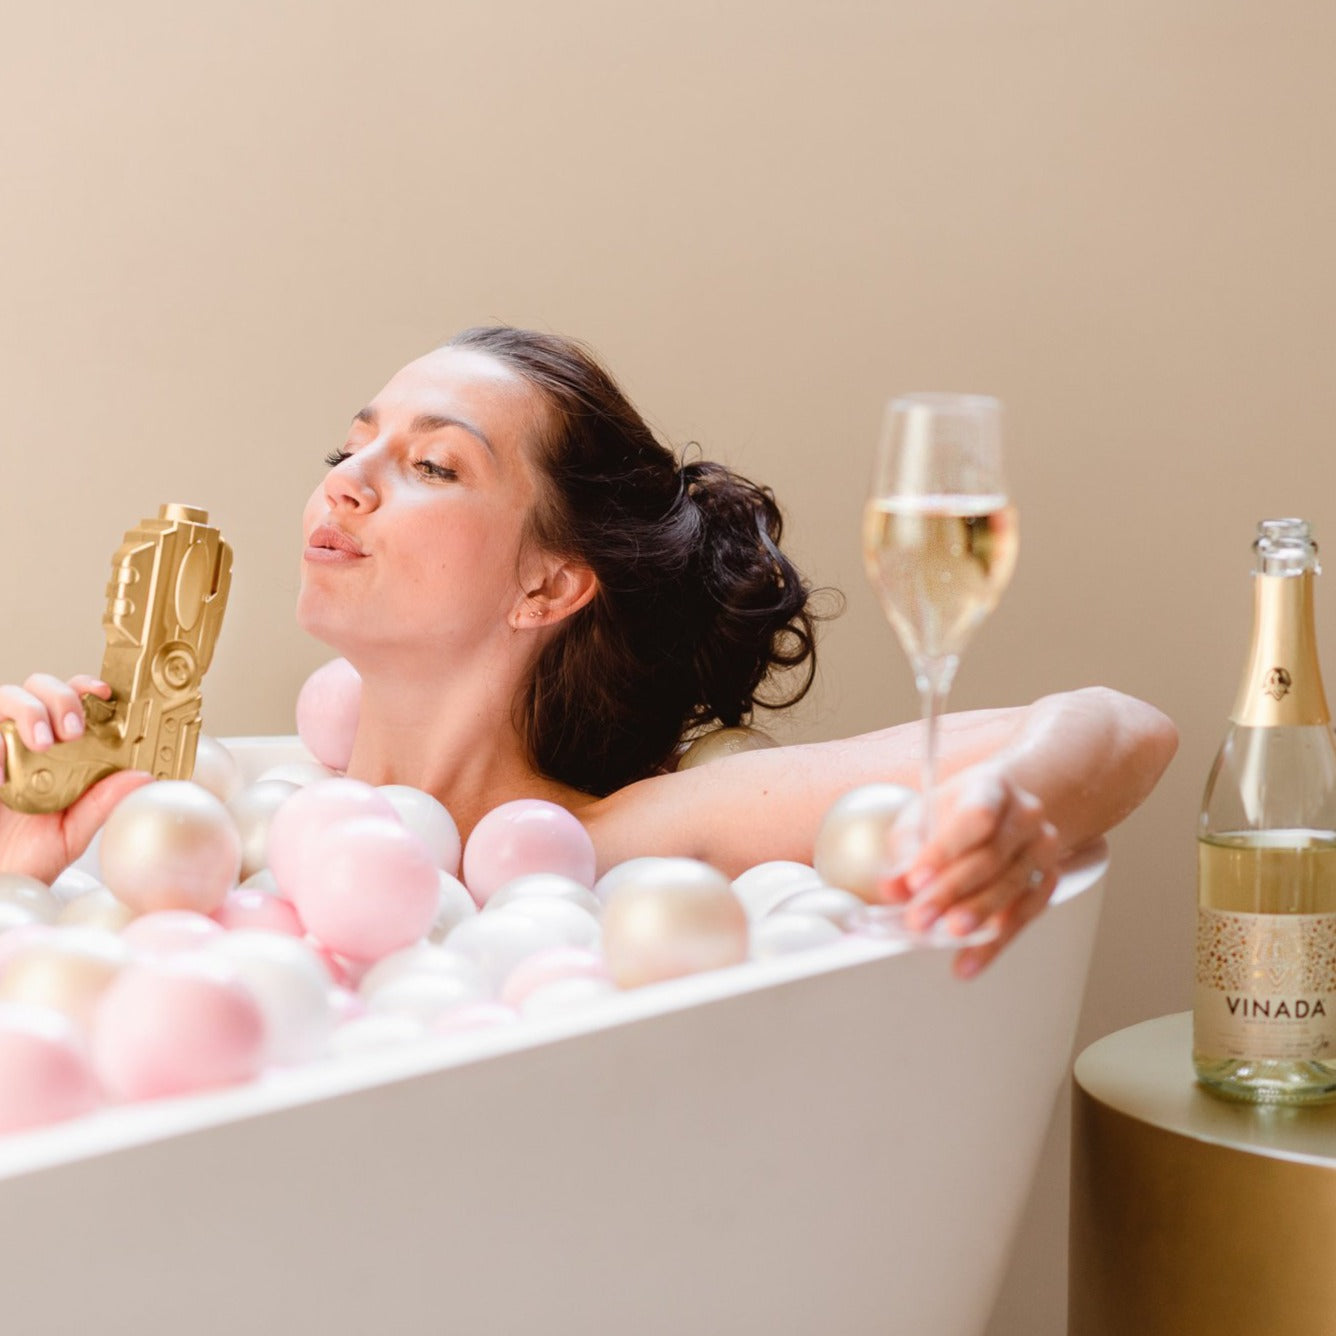 VINADA® Amazing Airén Gold (0%) 750 ml having bubbles while taking a bath